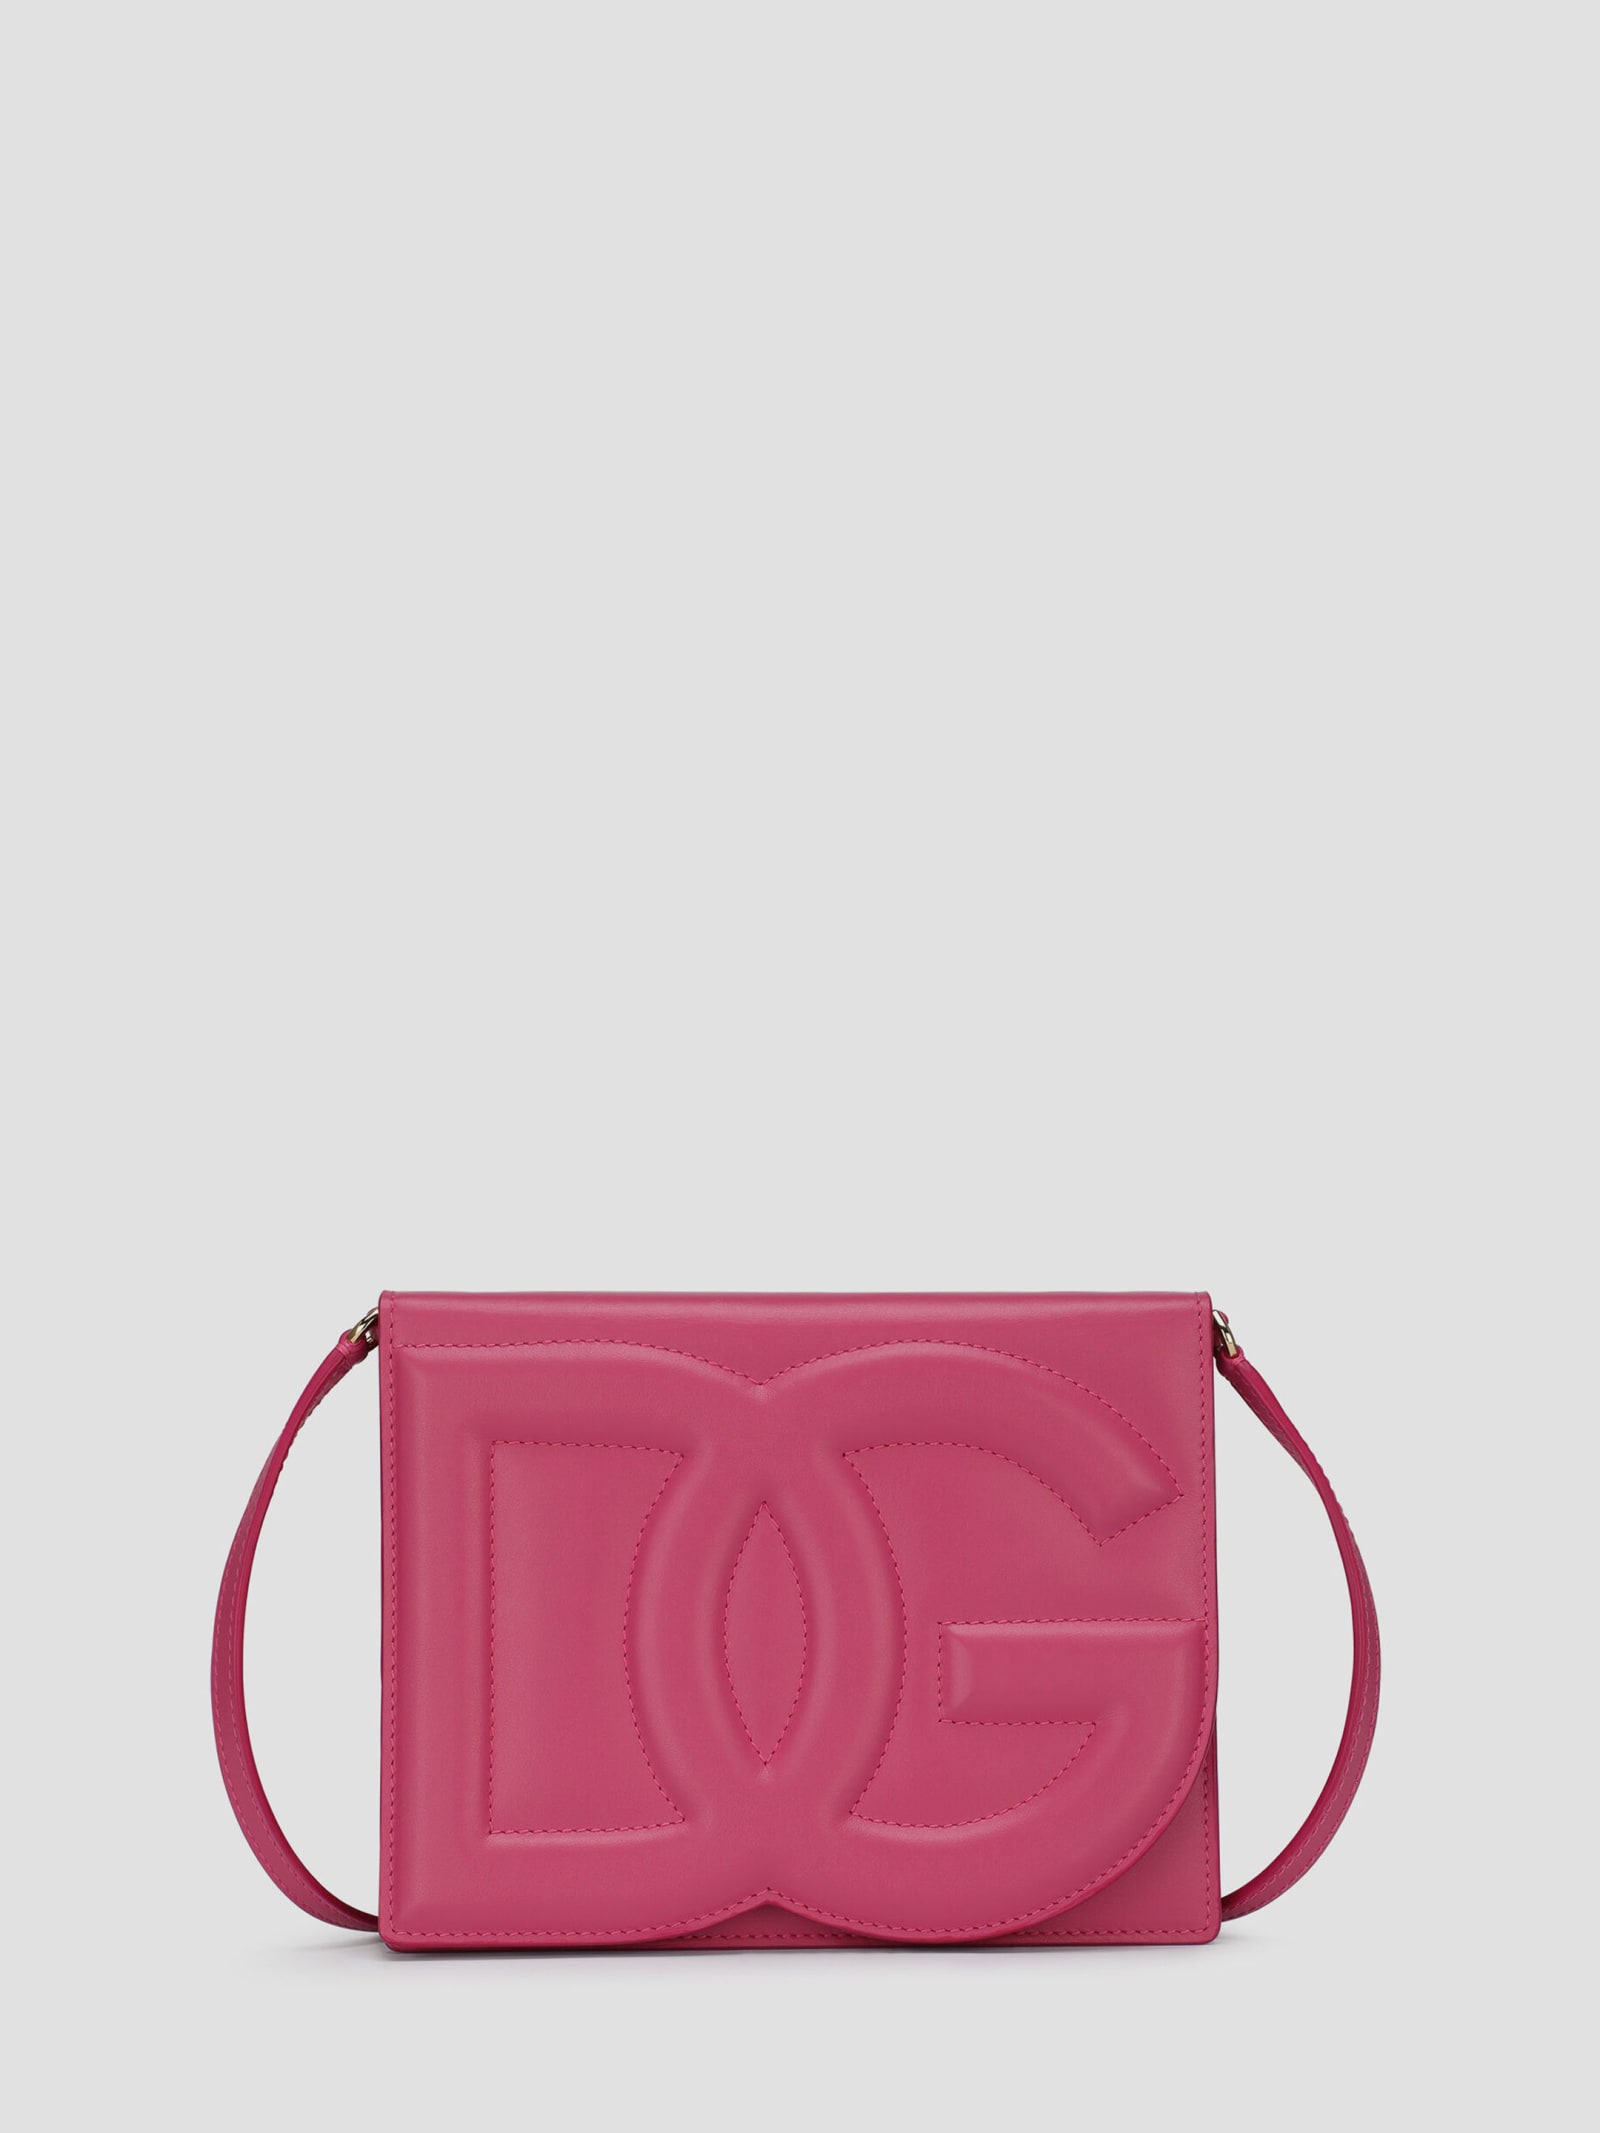 Dolce & Gabbana Dg Logo Bag